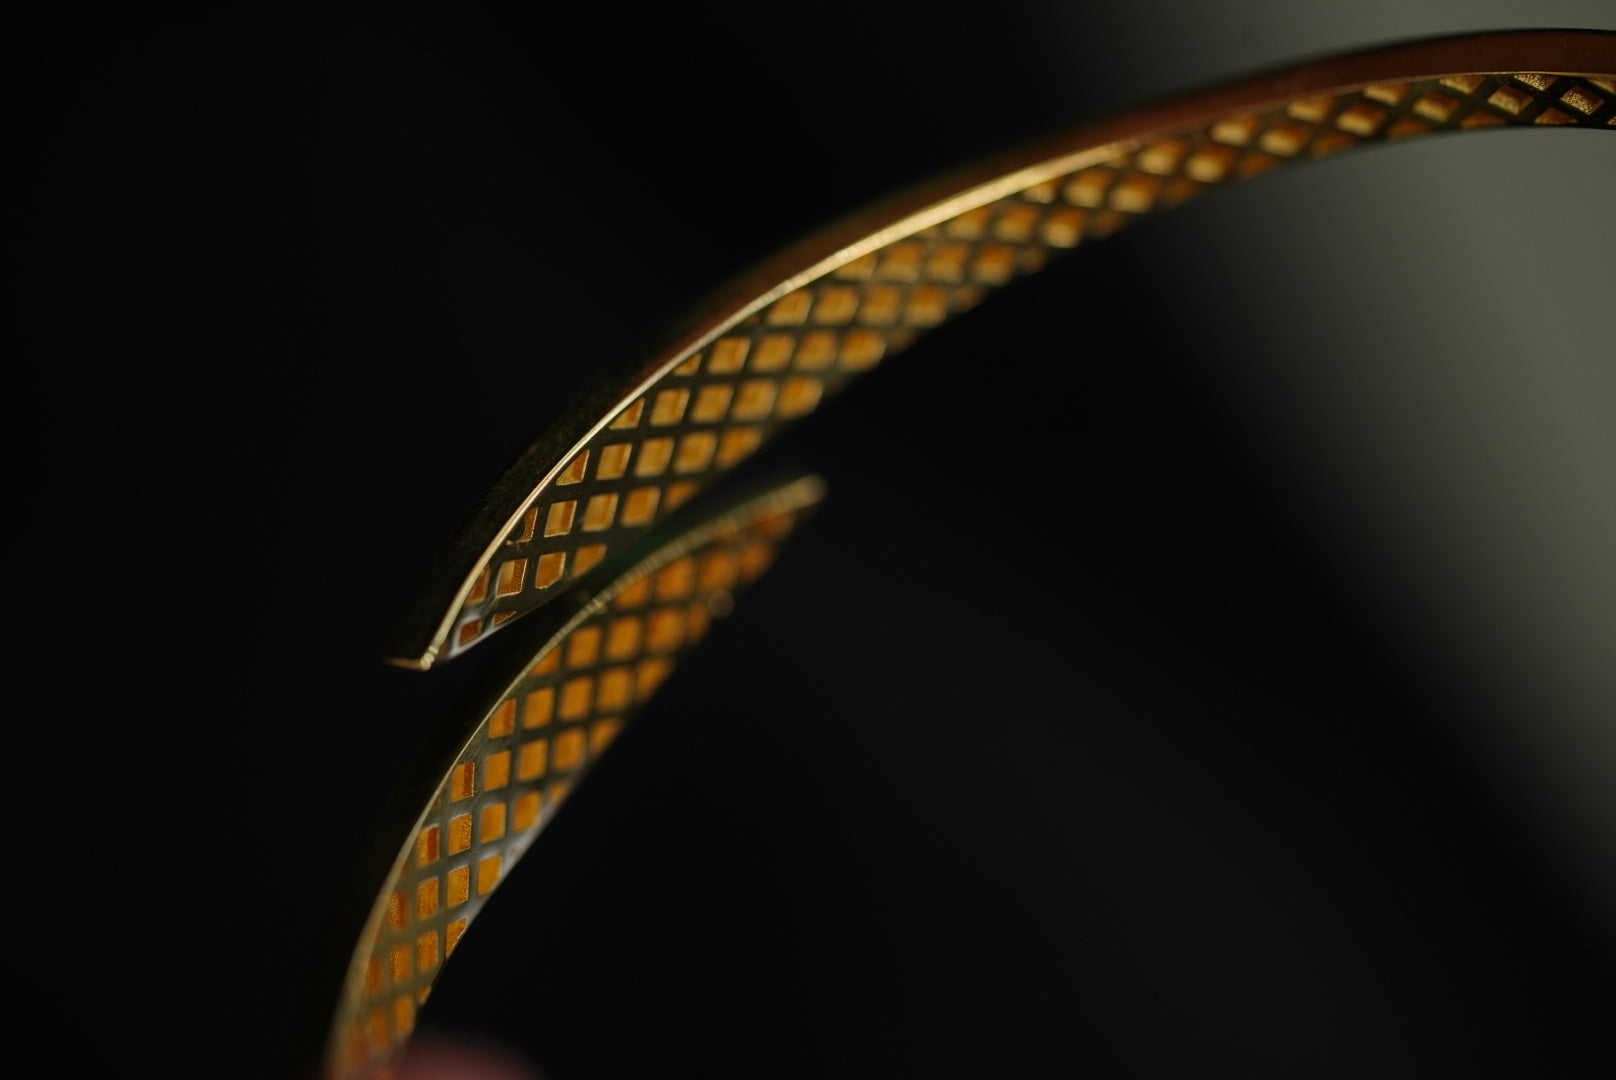 14k Gold Leaves Bangle Bracelet